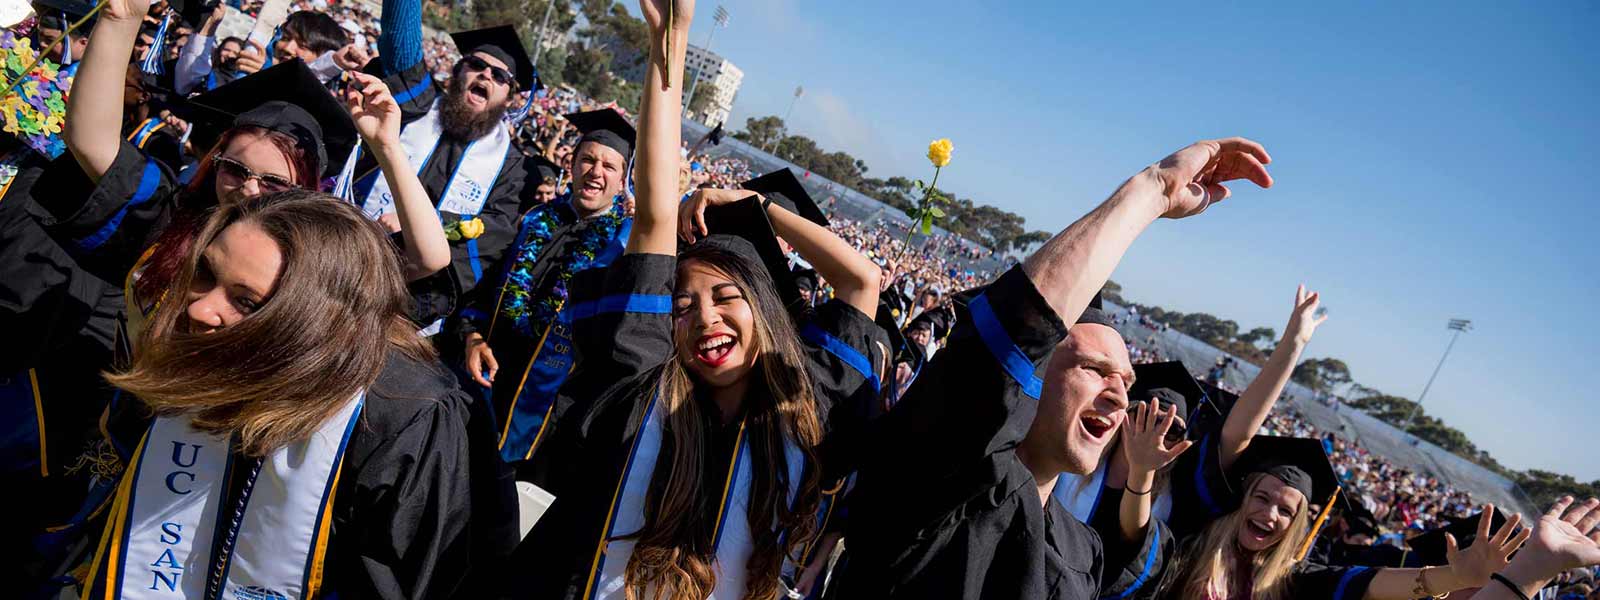 UC San Diego students celebrating graduation